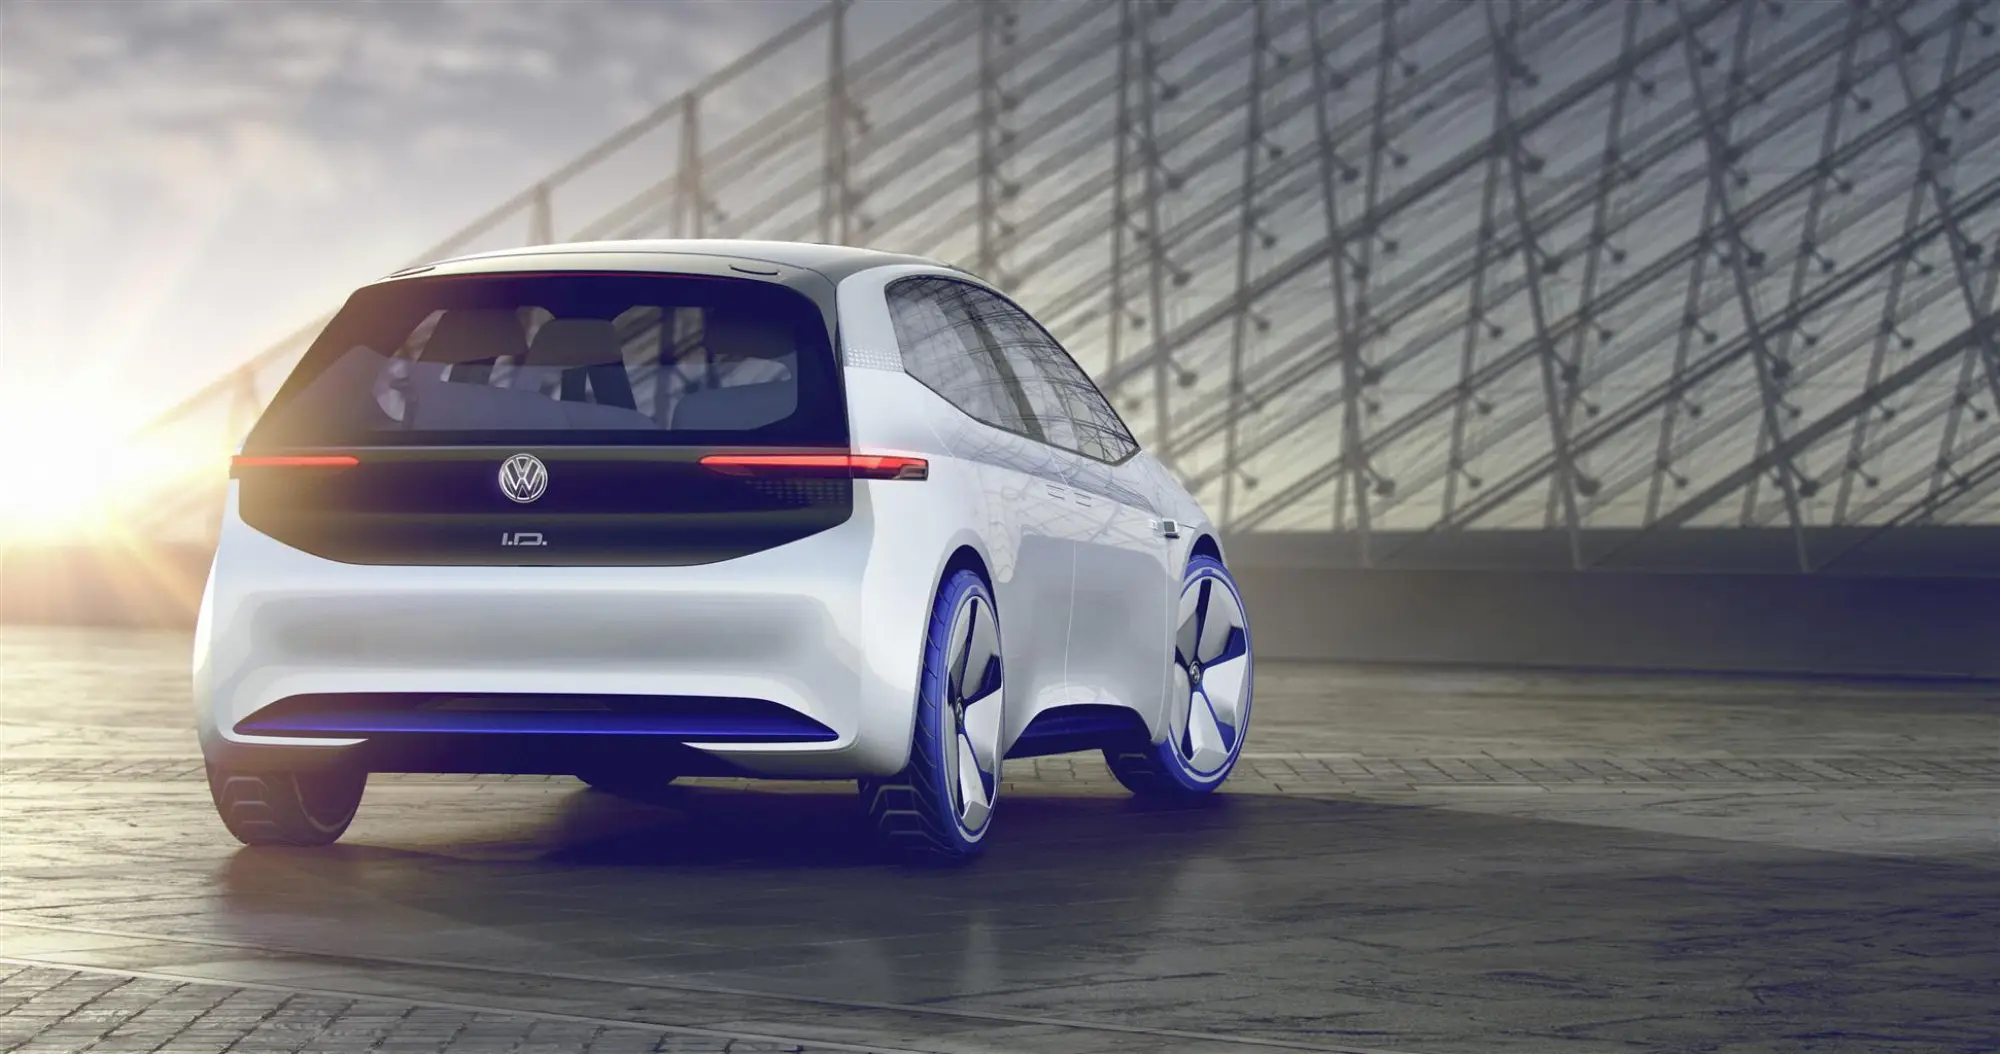 Volkswagen Concept I.D. Salone di parigi 2016 foto stampa - 4